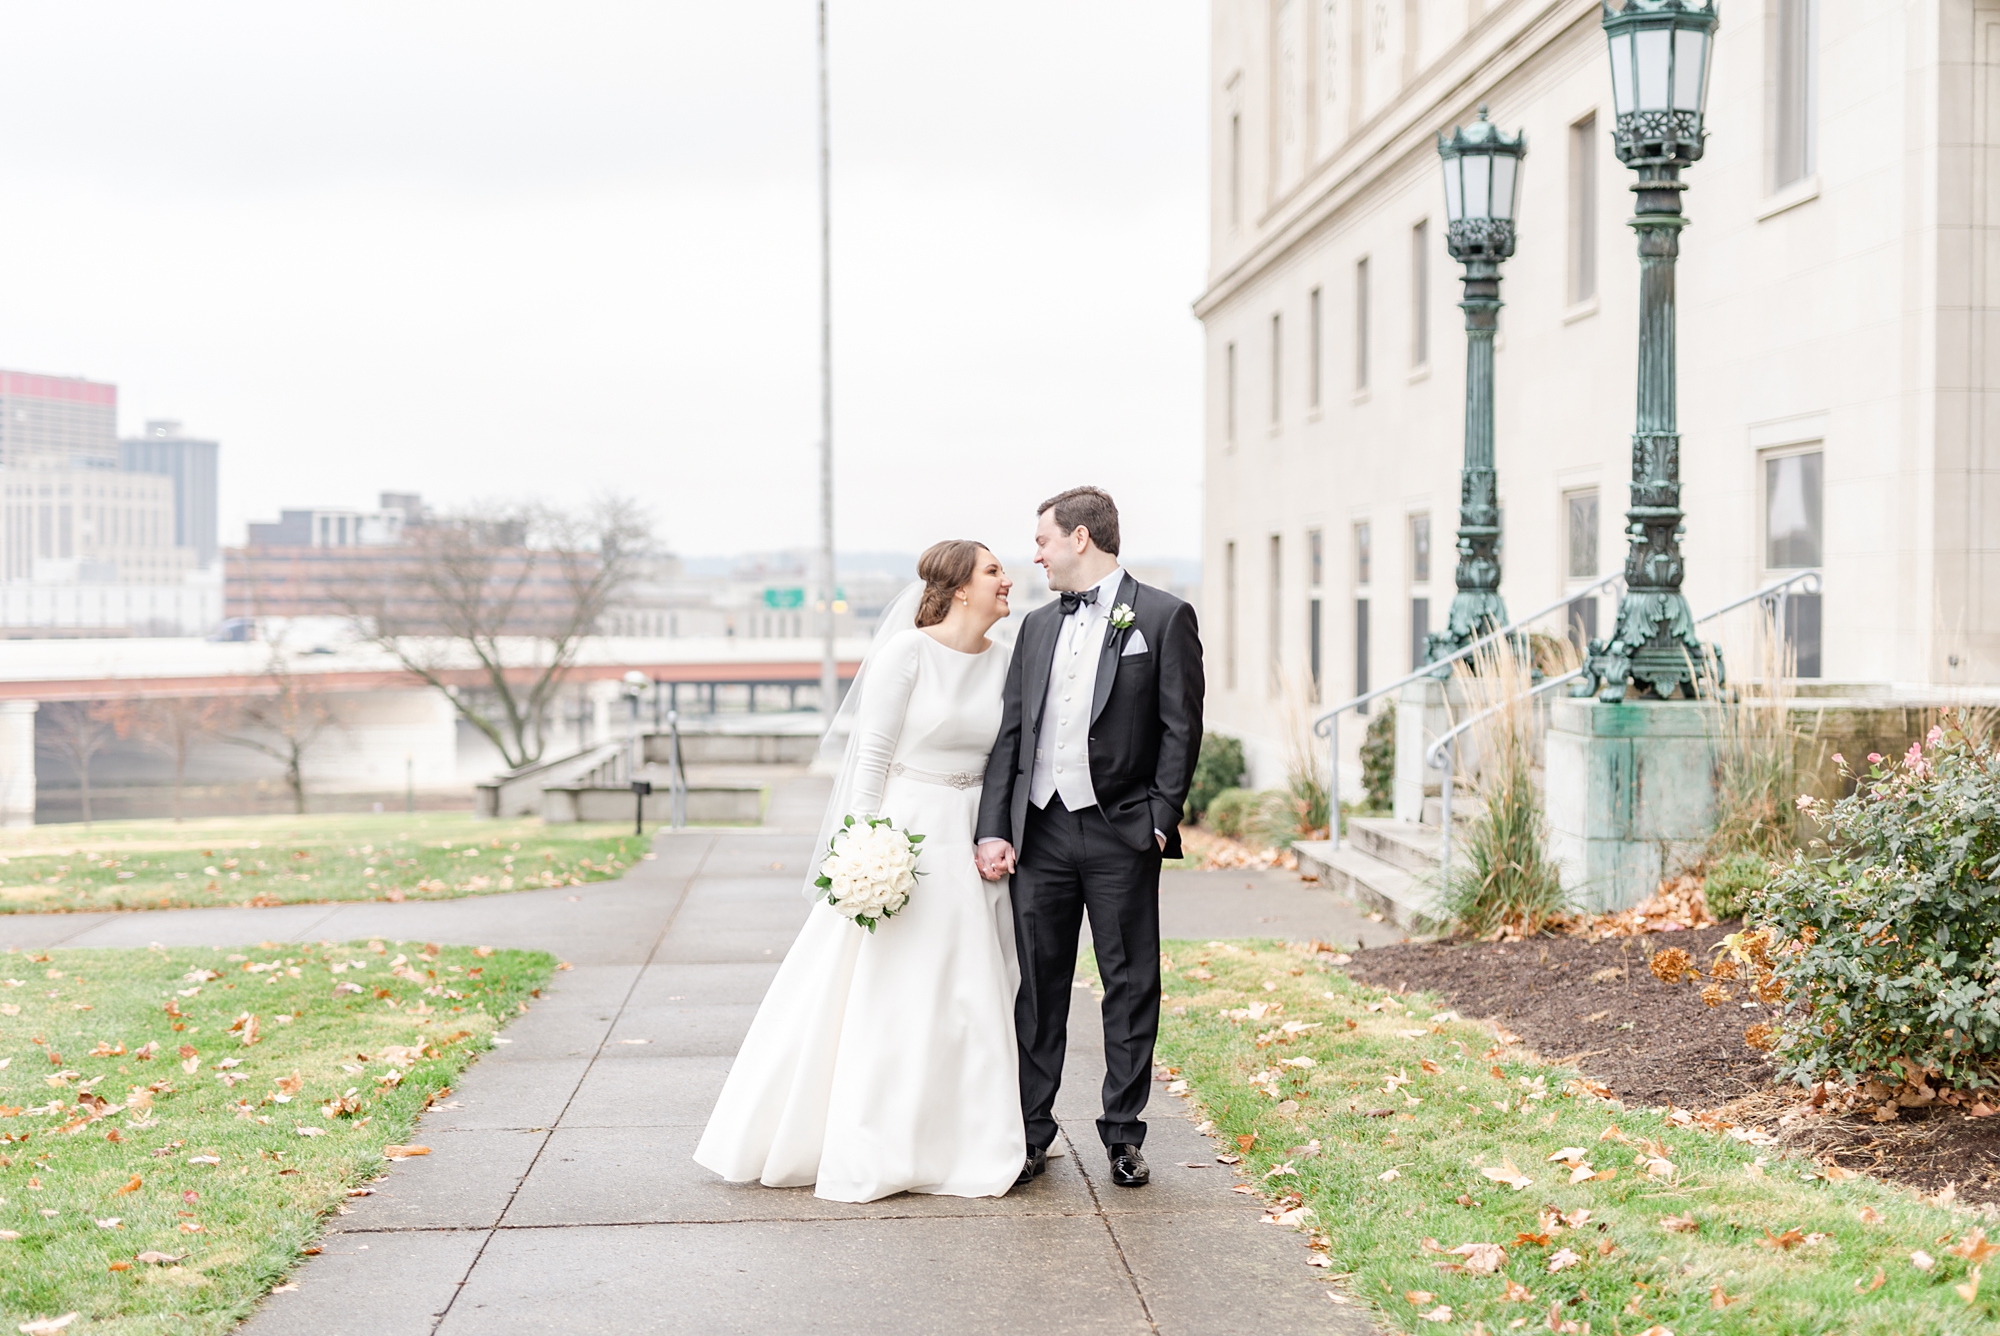 Dayton Masonic Center wedding portraits of bride and groom